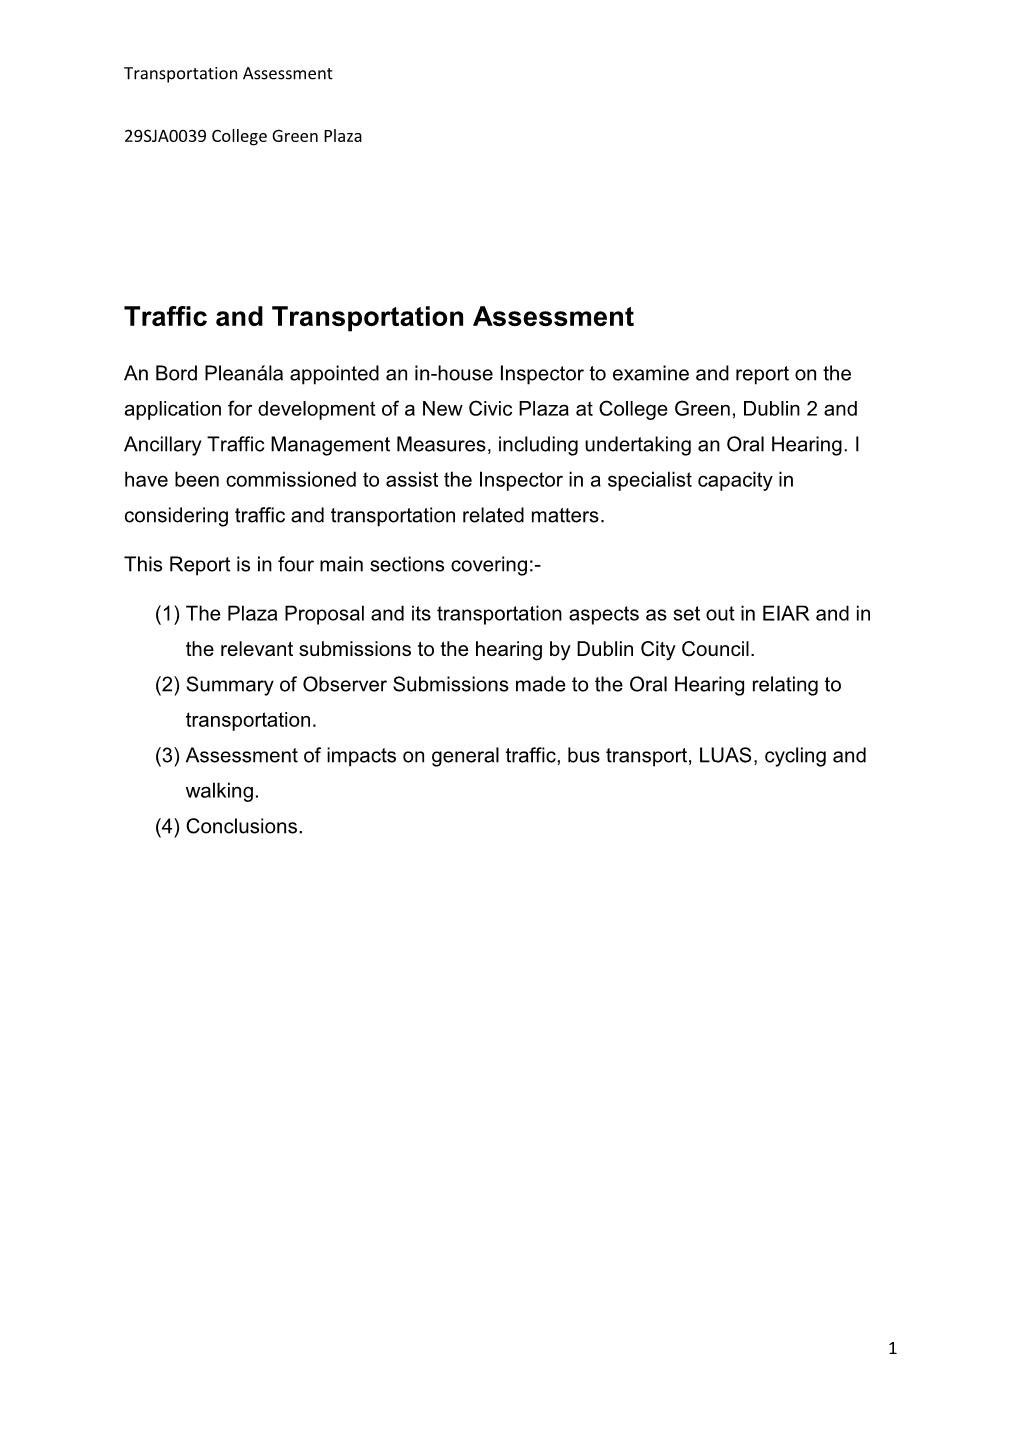 Traffic and Transportation Assessment